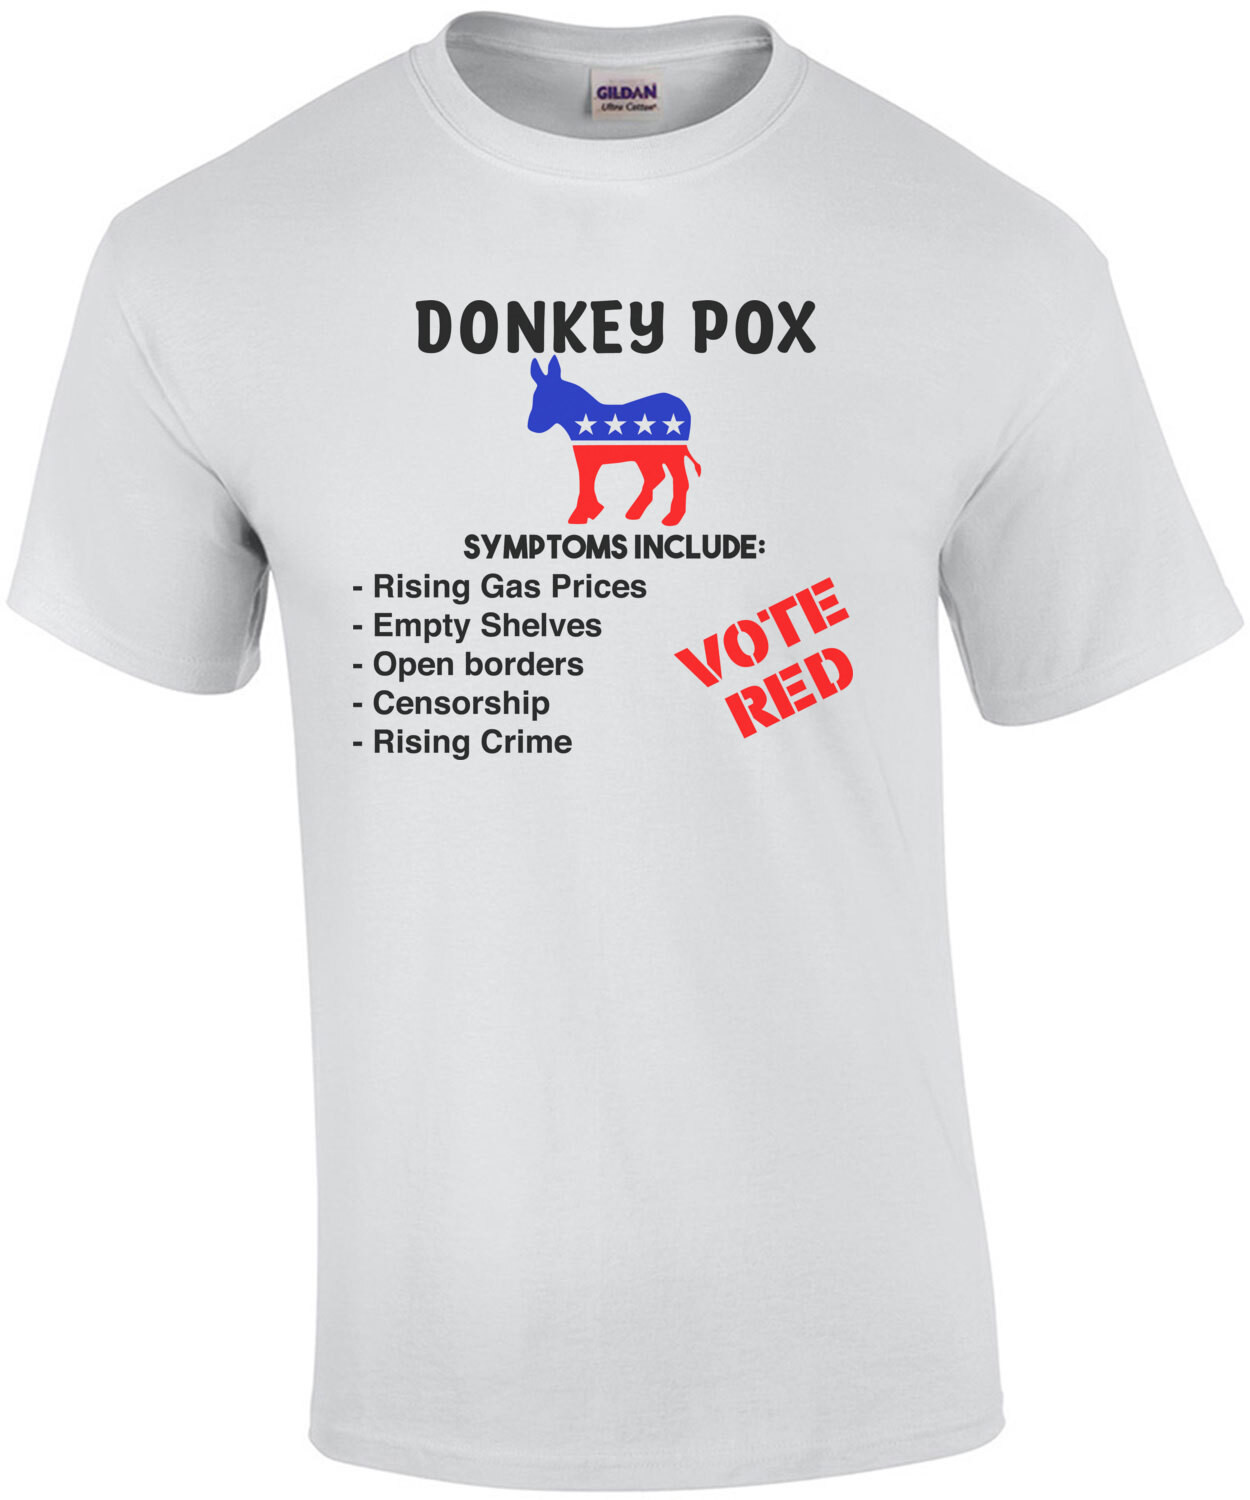 Donkey Pox - Funny Political Anti-Democrat Shirt